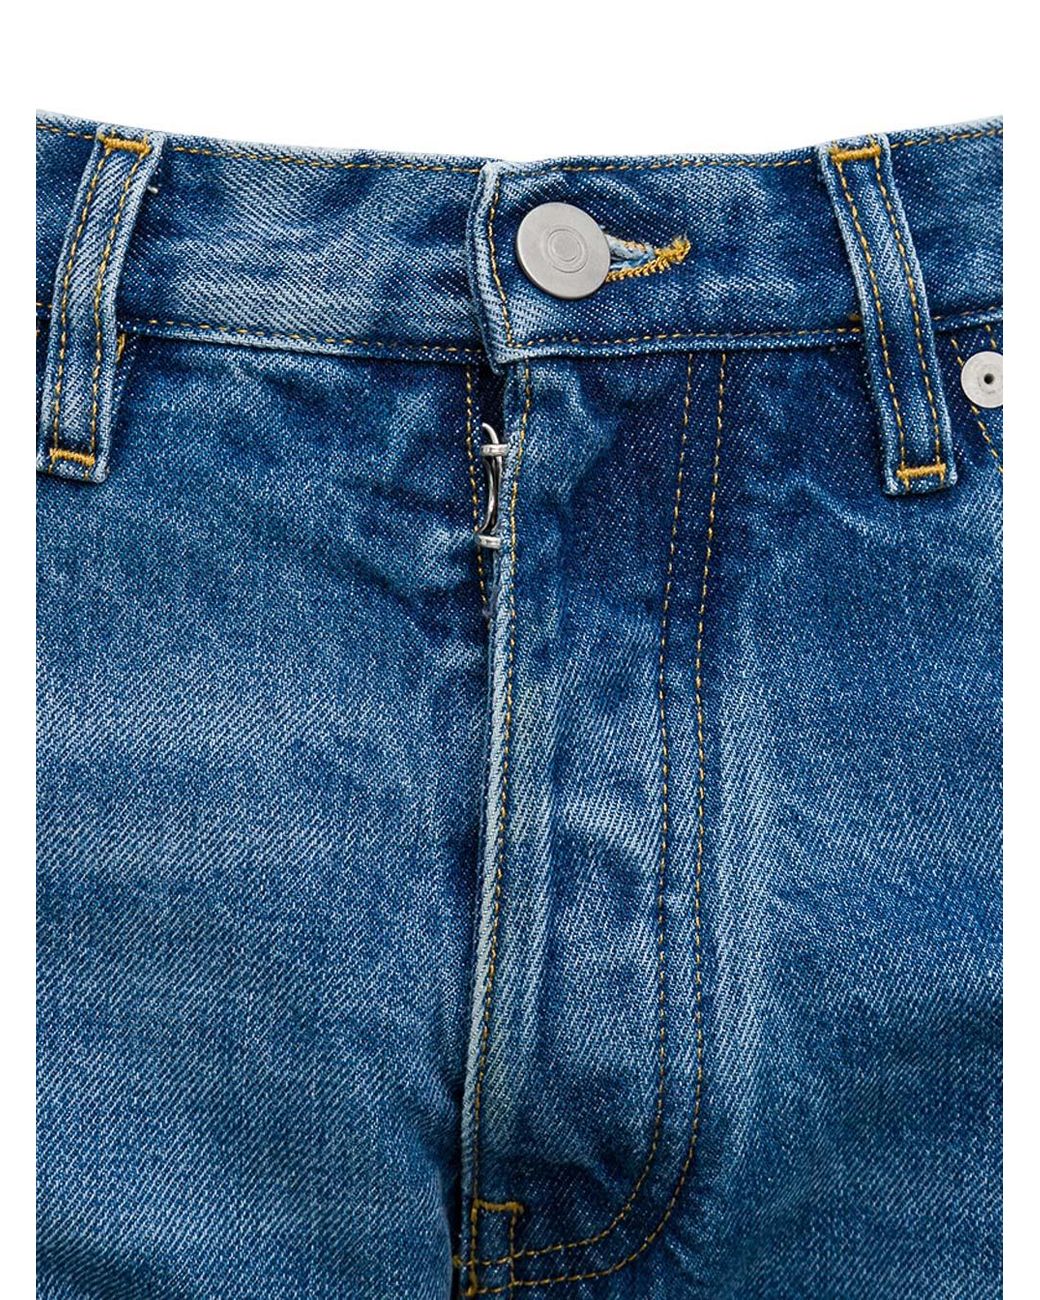 Maison Margiela Five Pockets Denim Jeans in Blue - Lyst